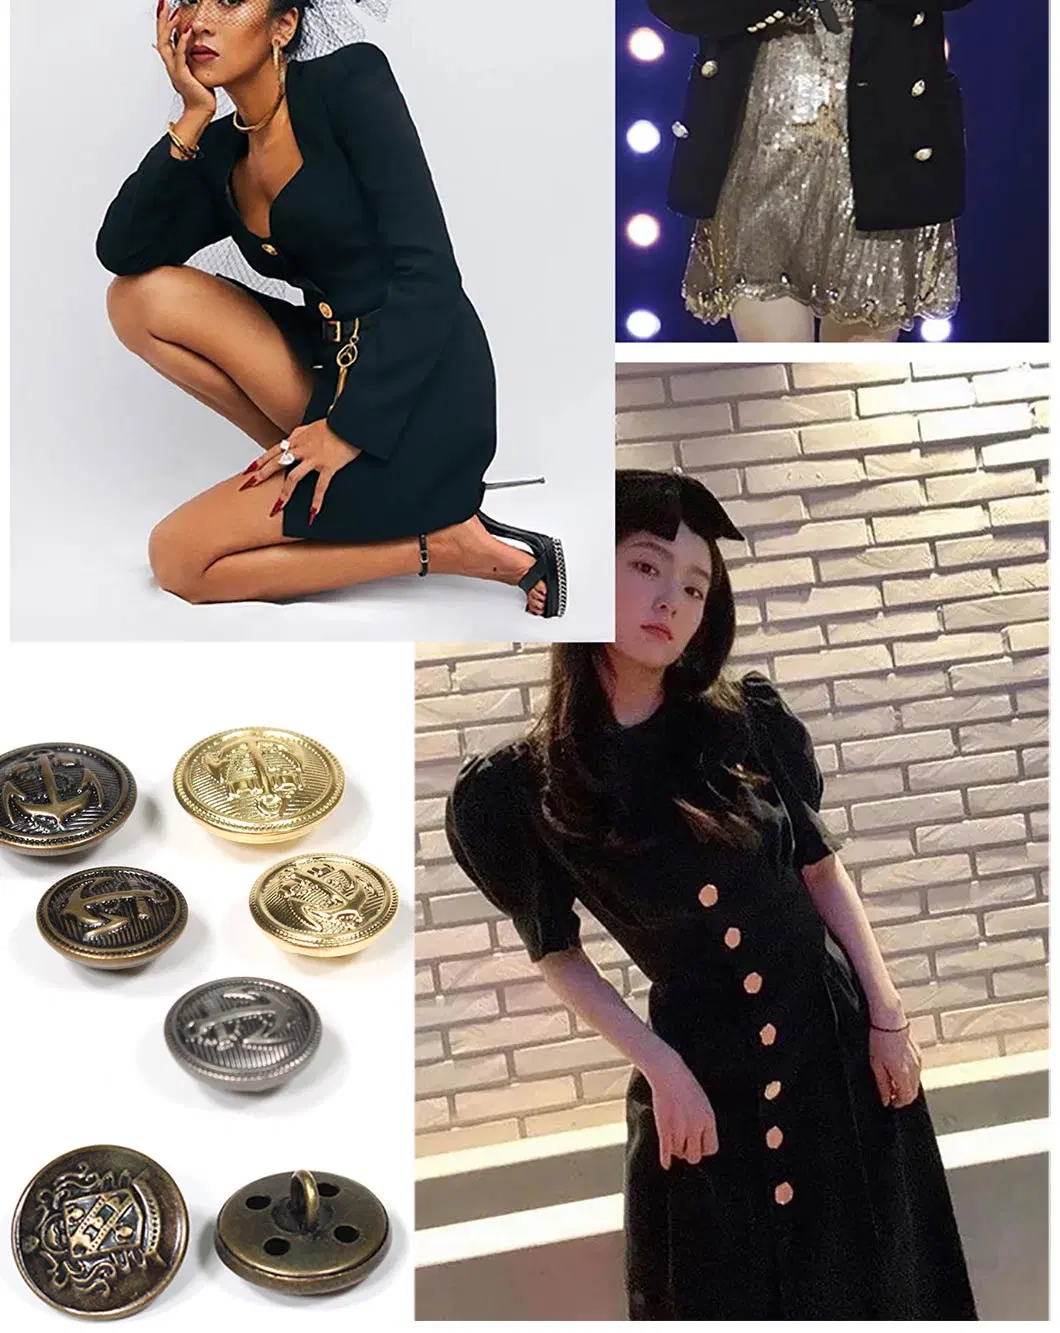 Embossed Brand Pattern Logo Zinc Alloy Shank Button Custom Metal Uniform Shank Buttons for Garment Accessories